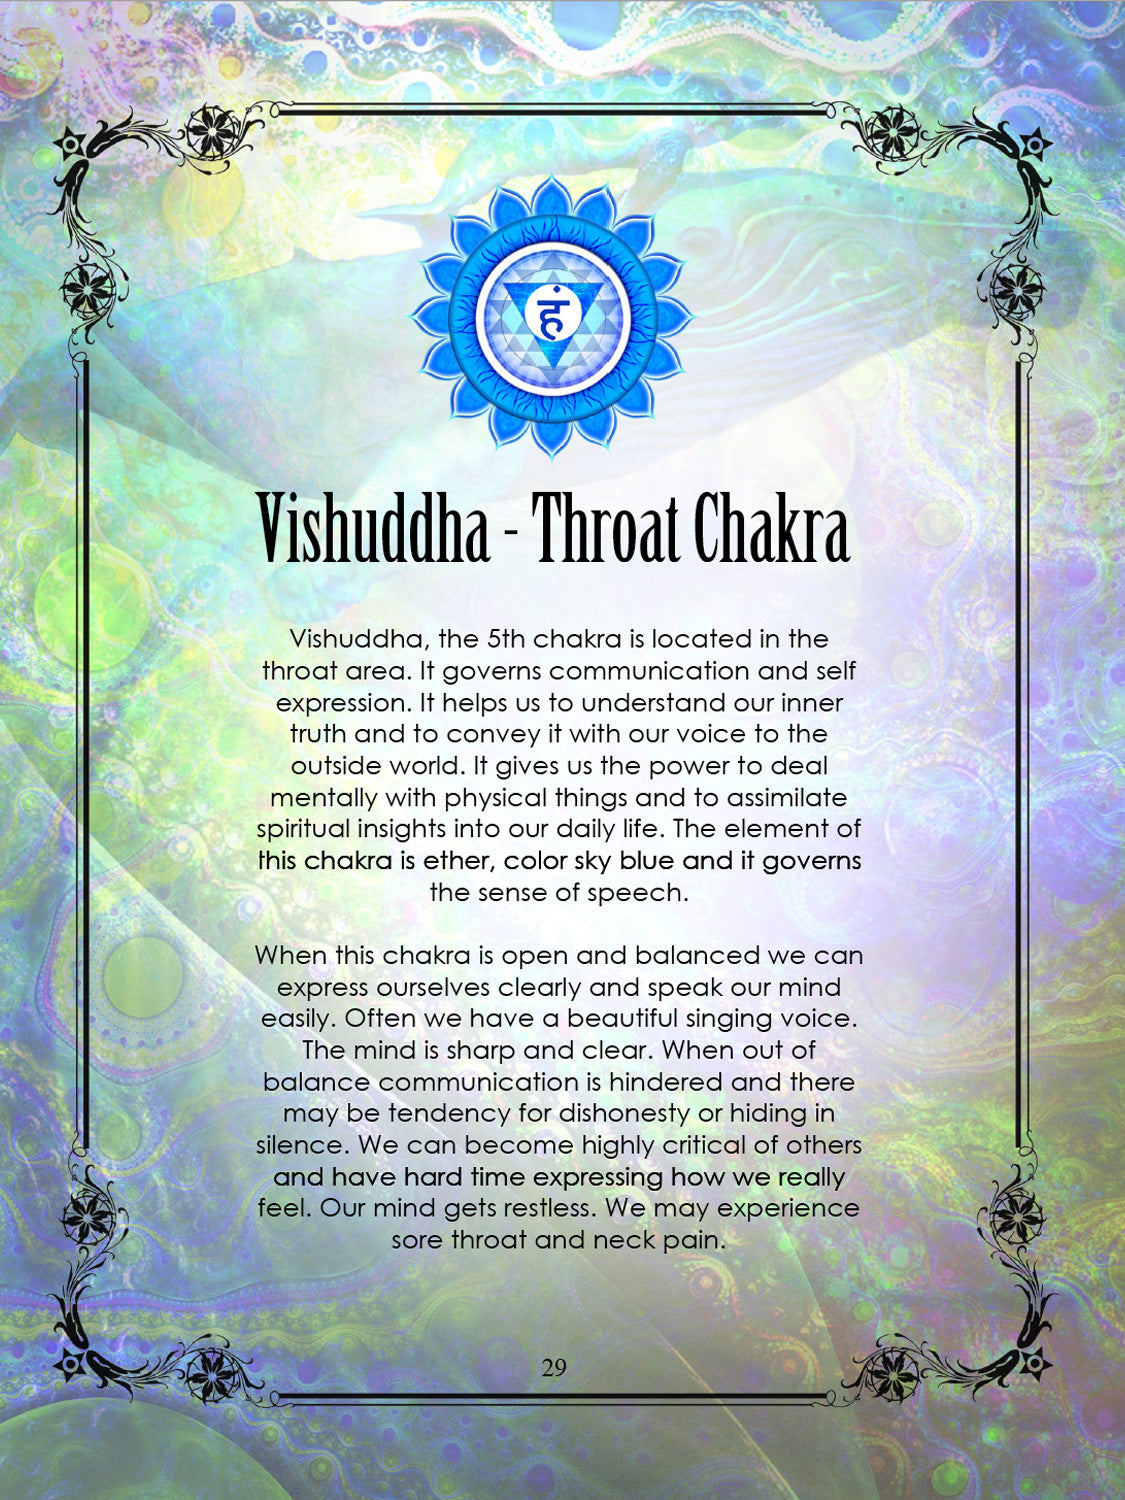 Journey Through the Chakras (eBook)